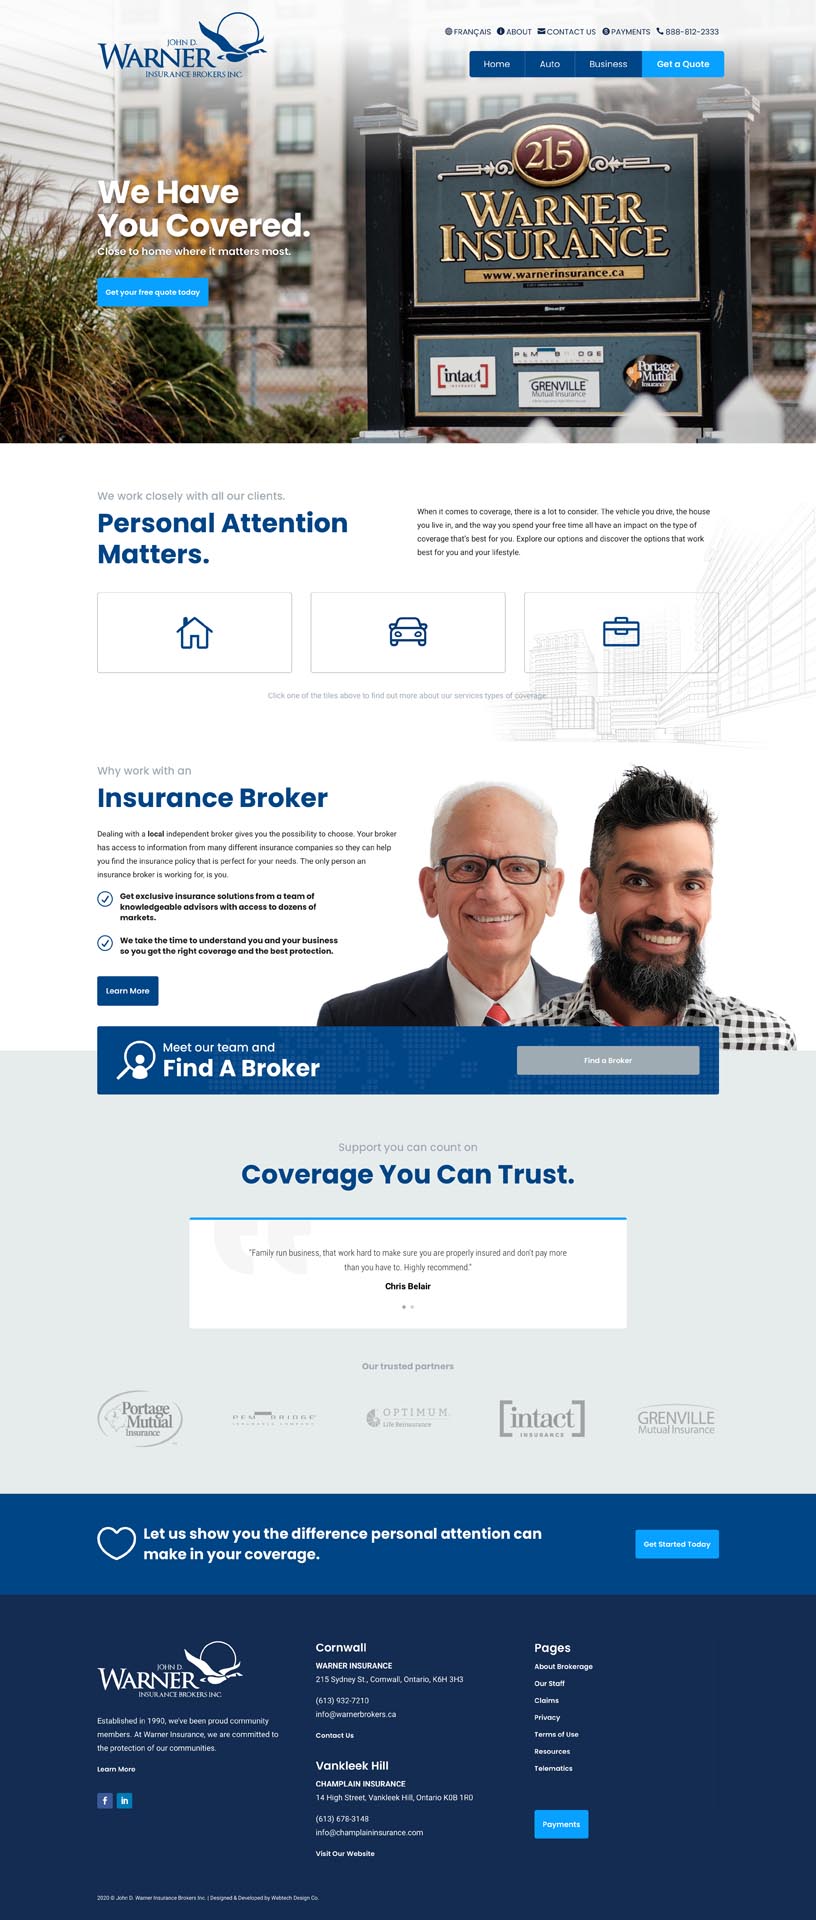 Small Business website design services portfolio item for Warner Insurance Agency